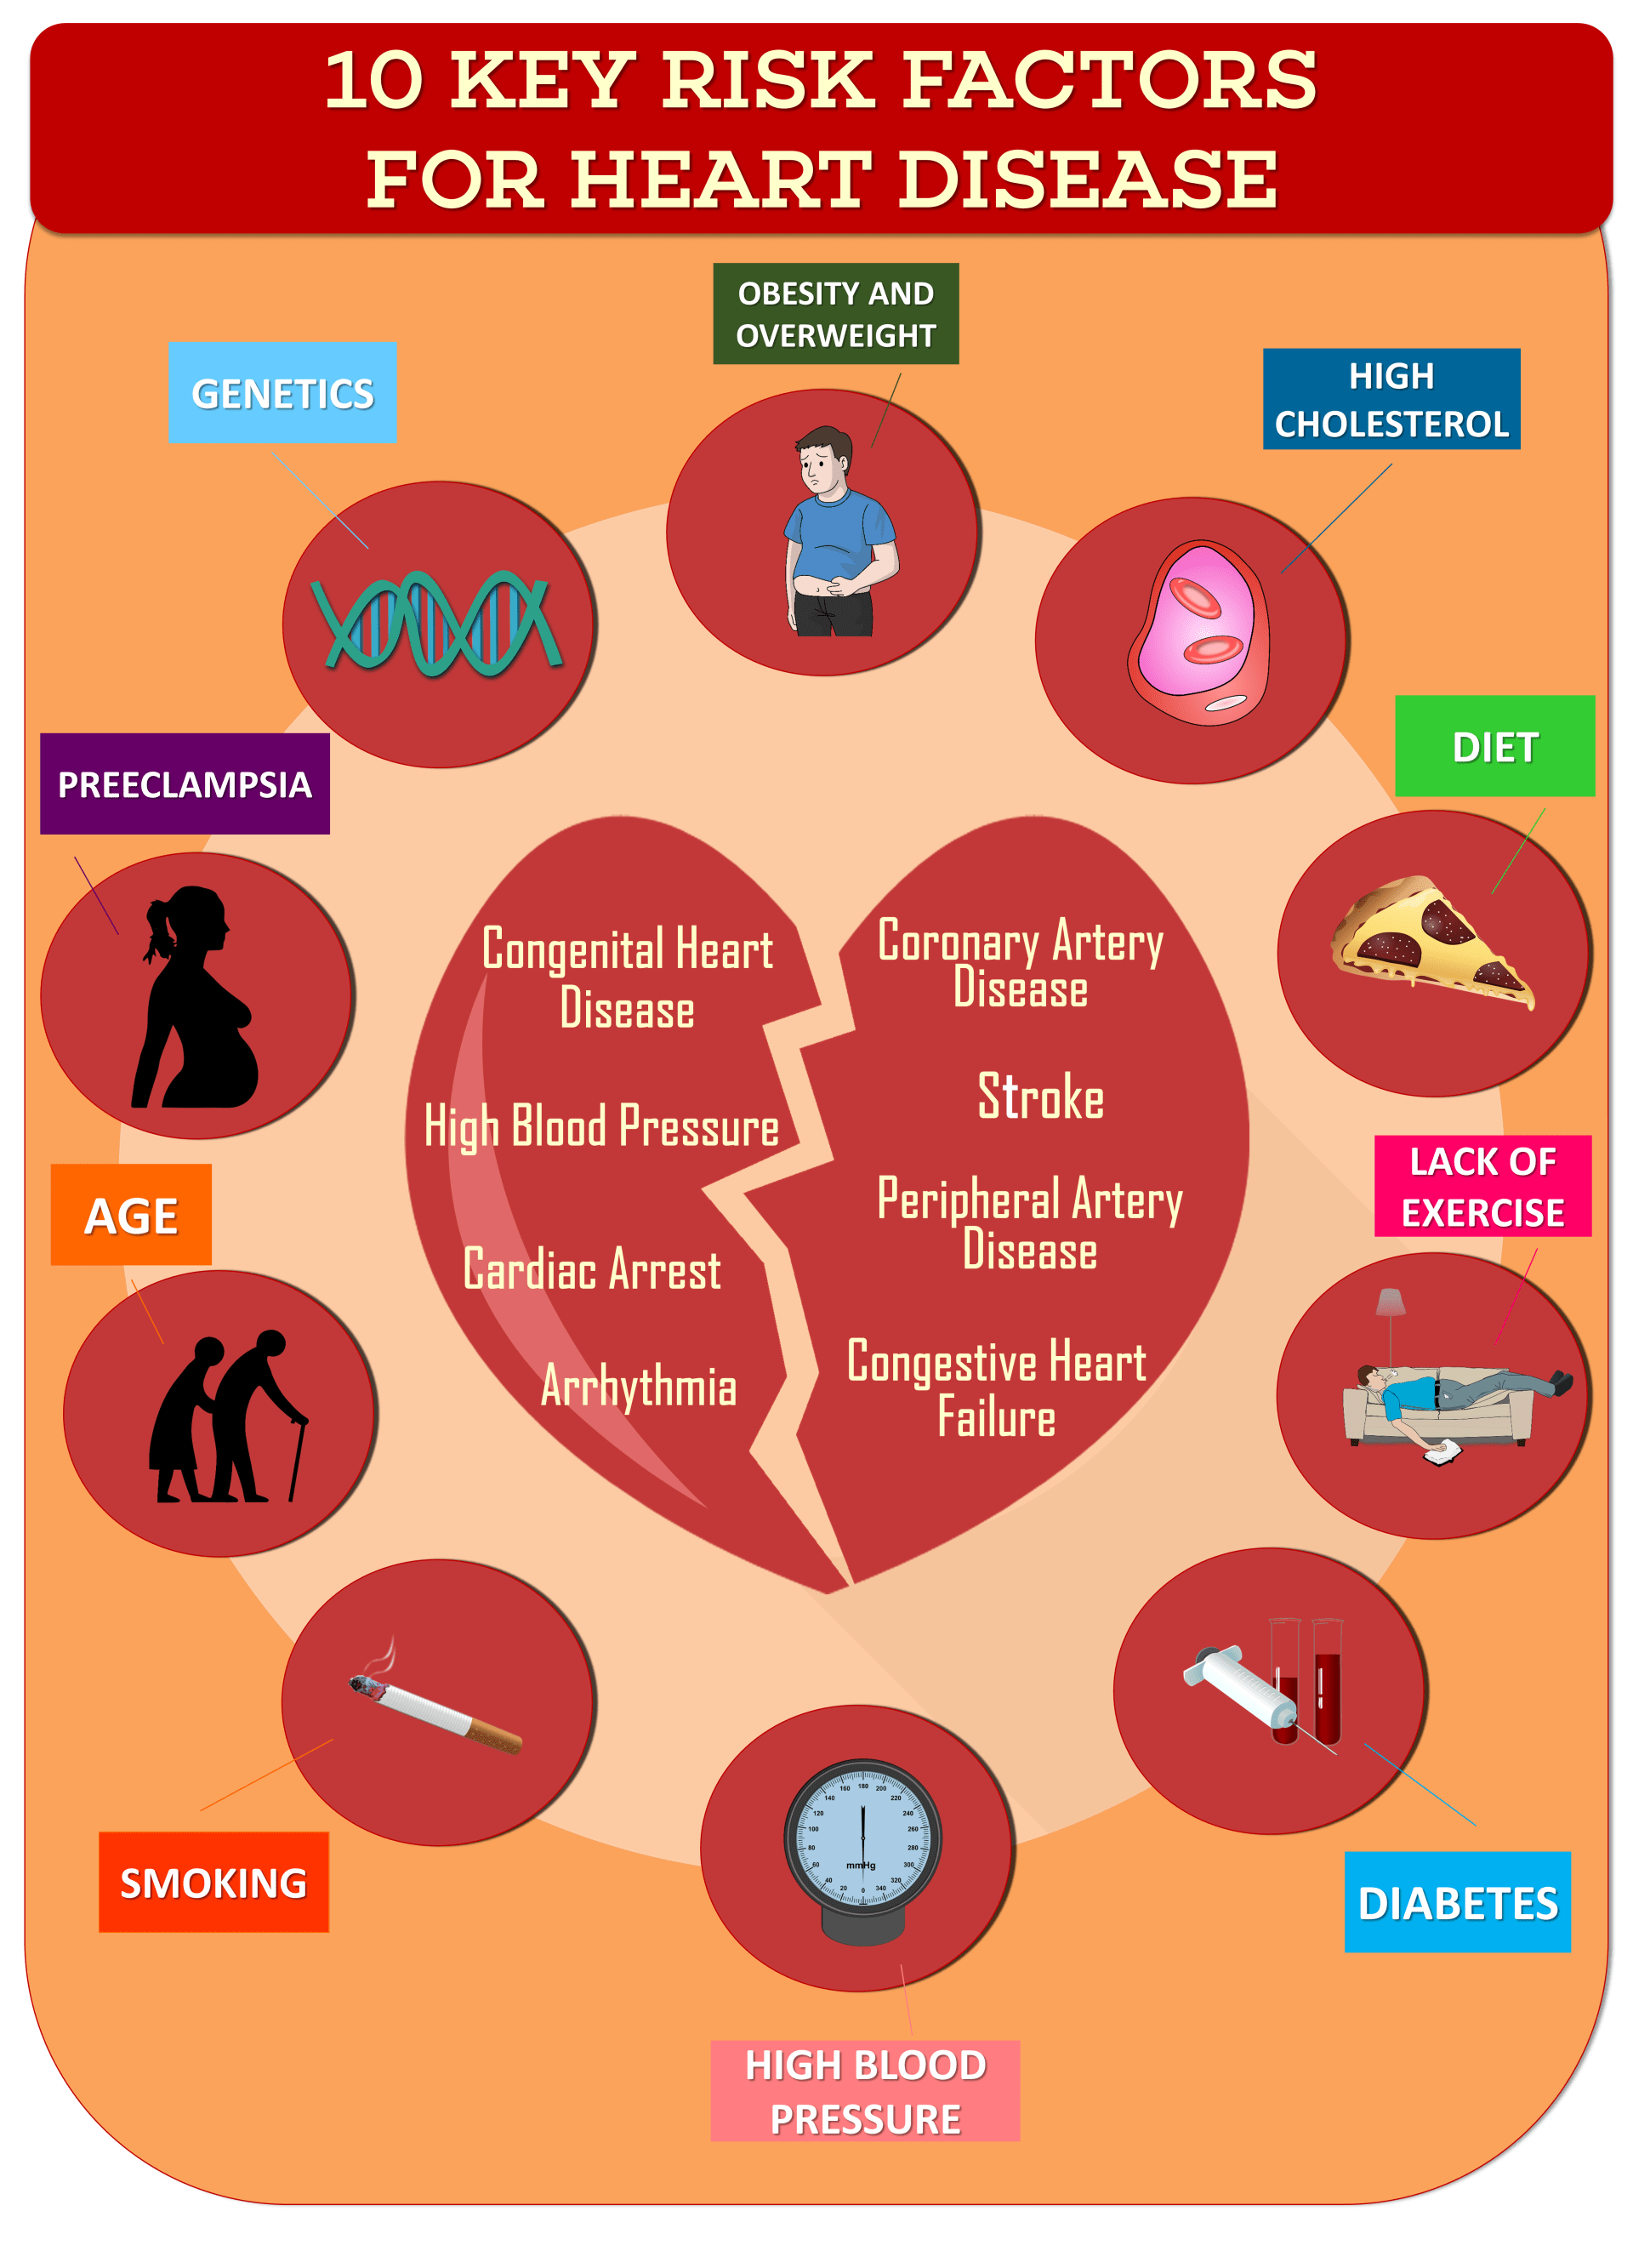 CVD risk factors